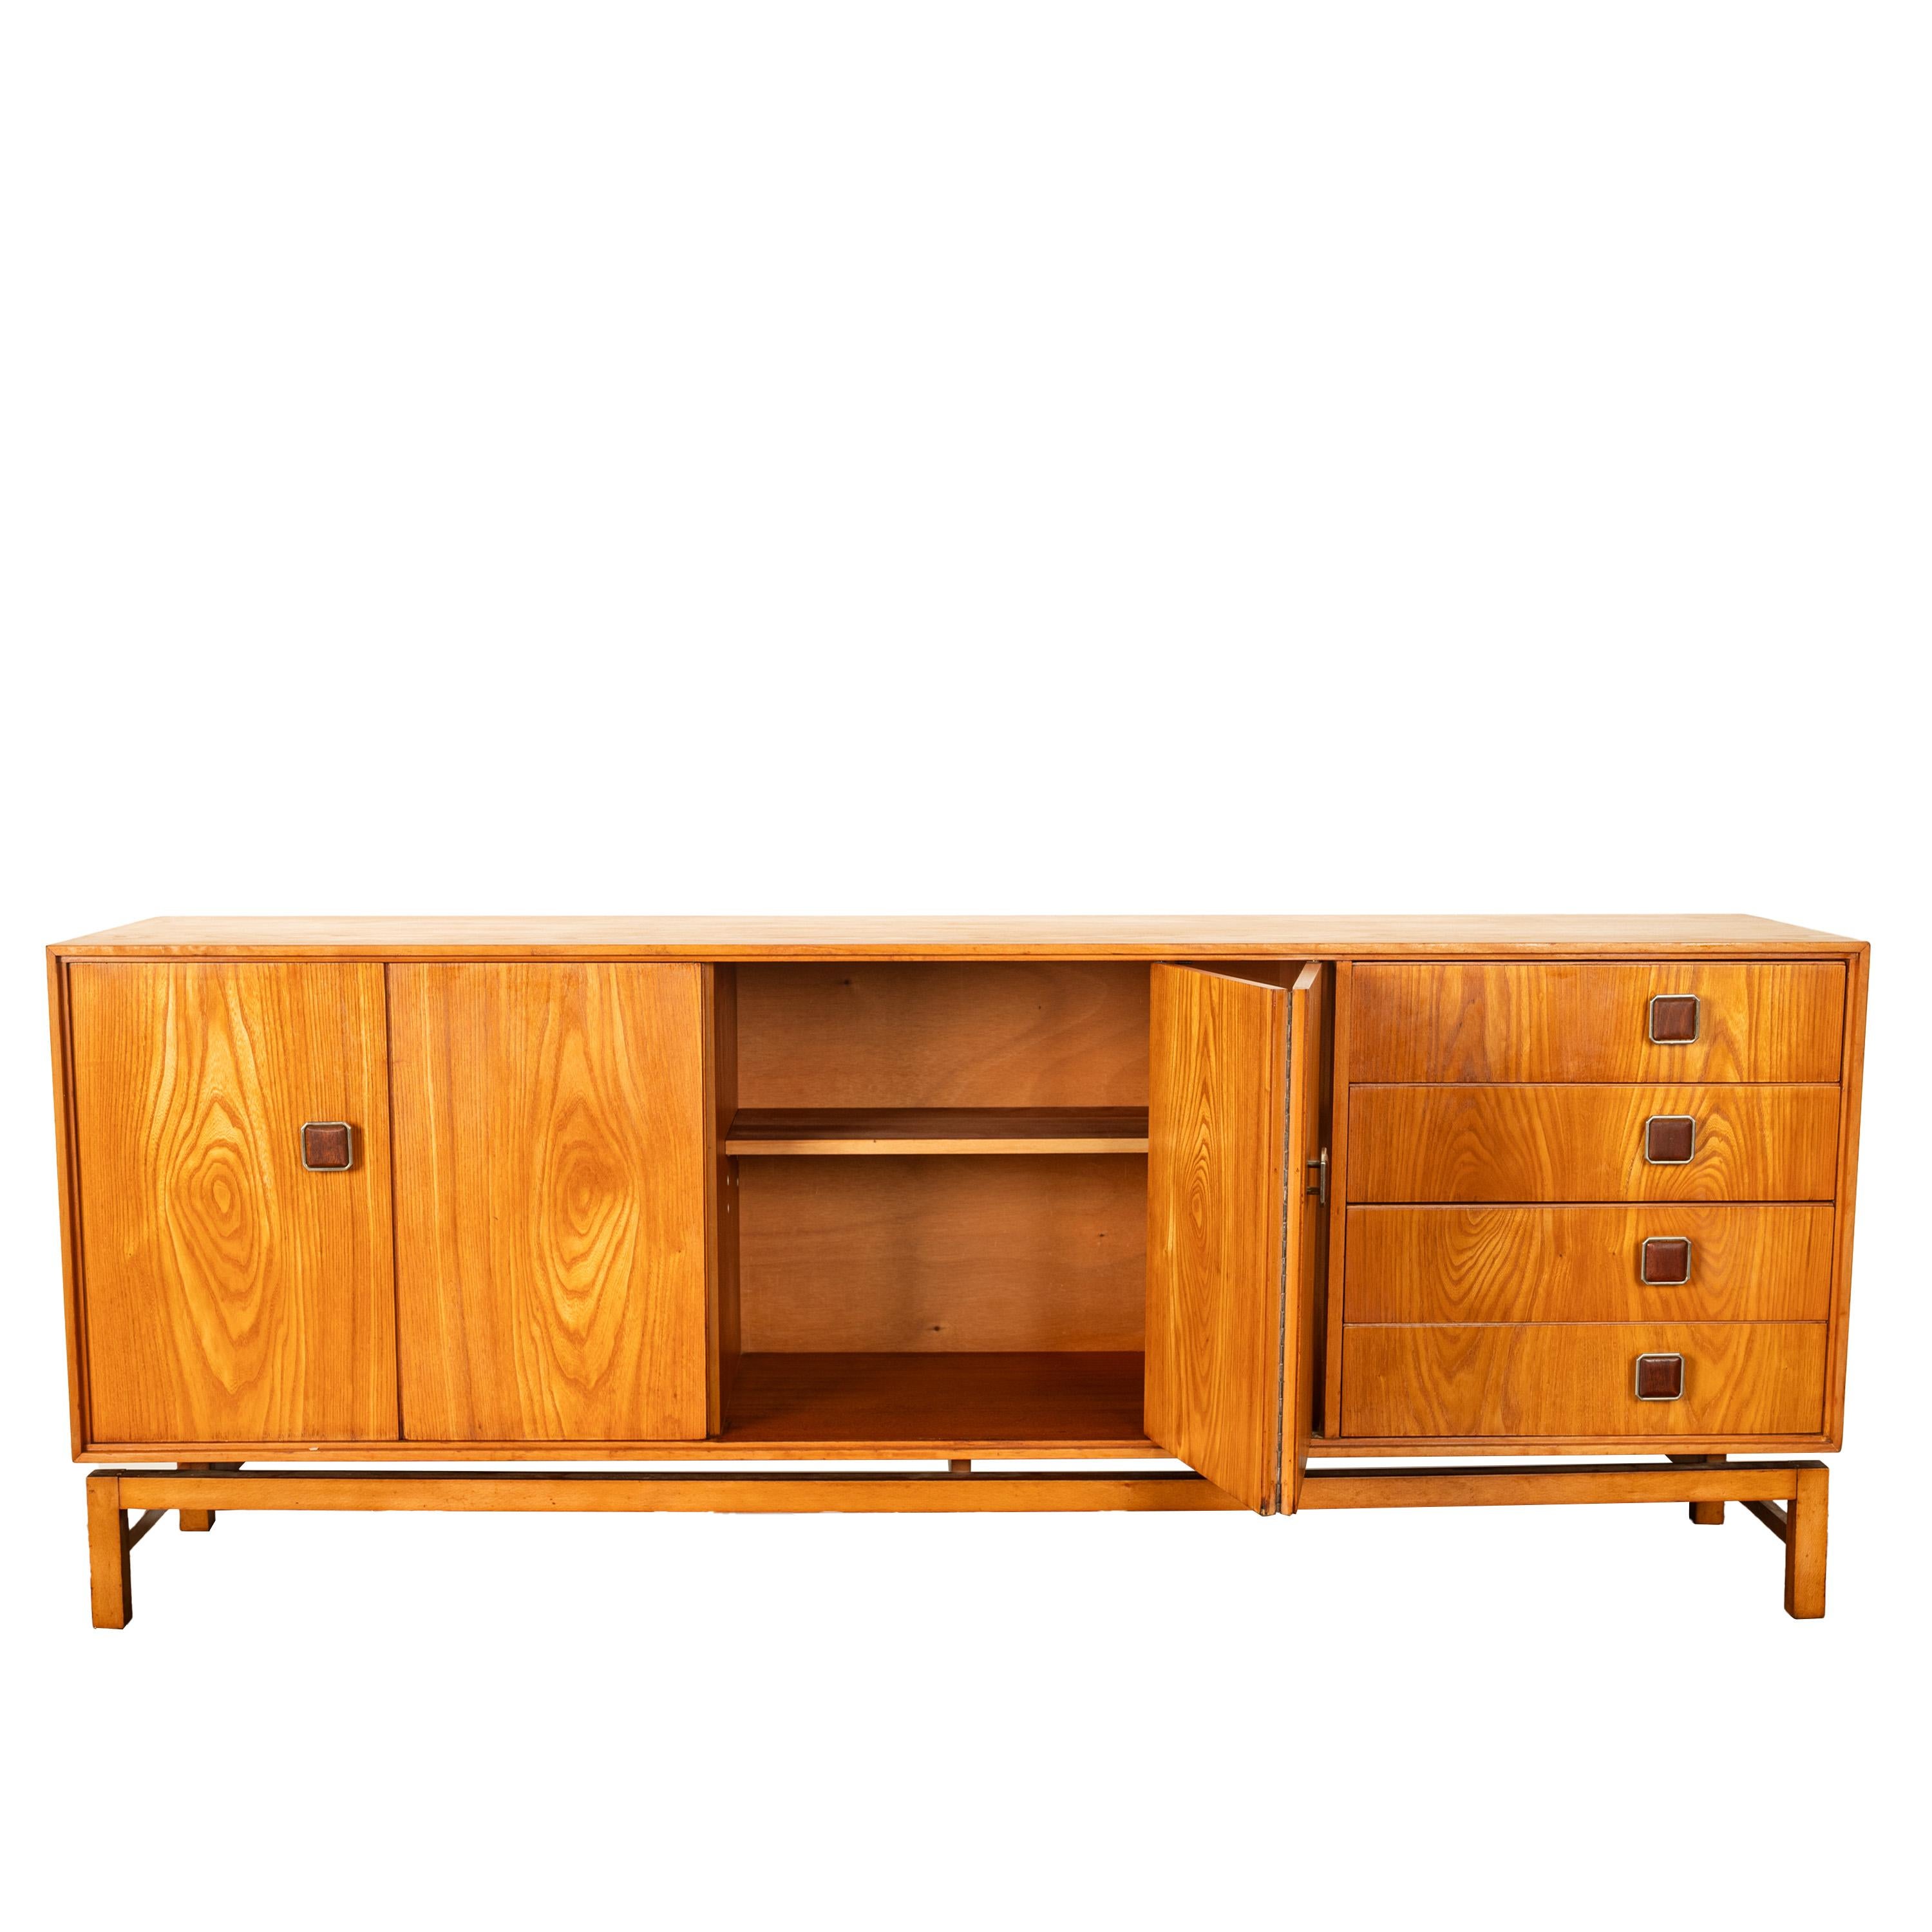 Original Danish Mid Century Modern Teak Credenza Sideboard Cabinet 6' Long 1960  1